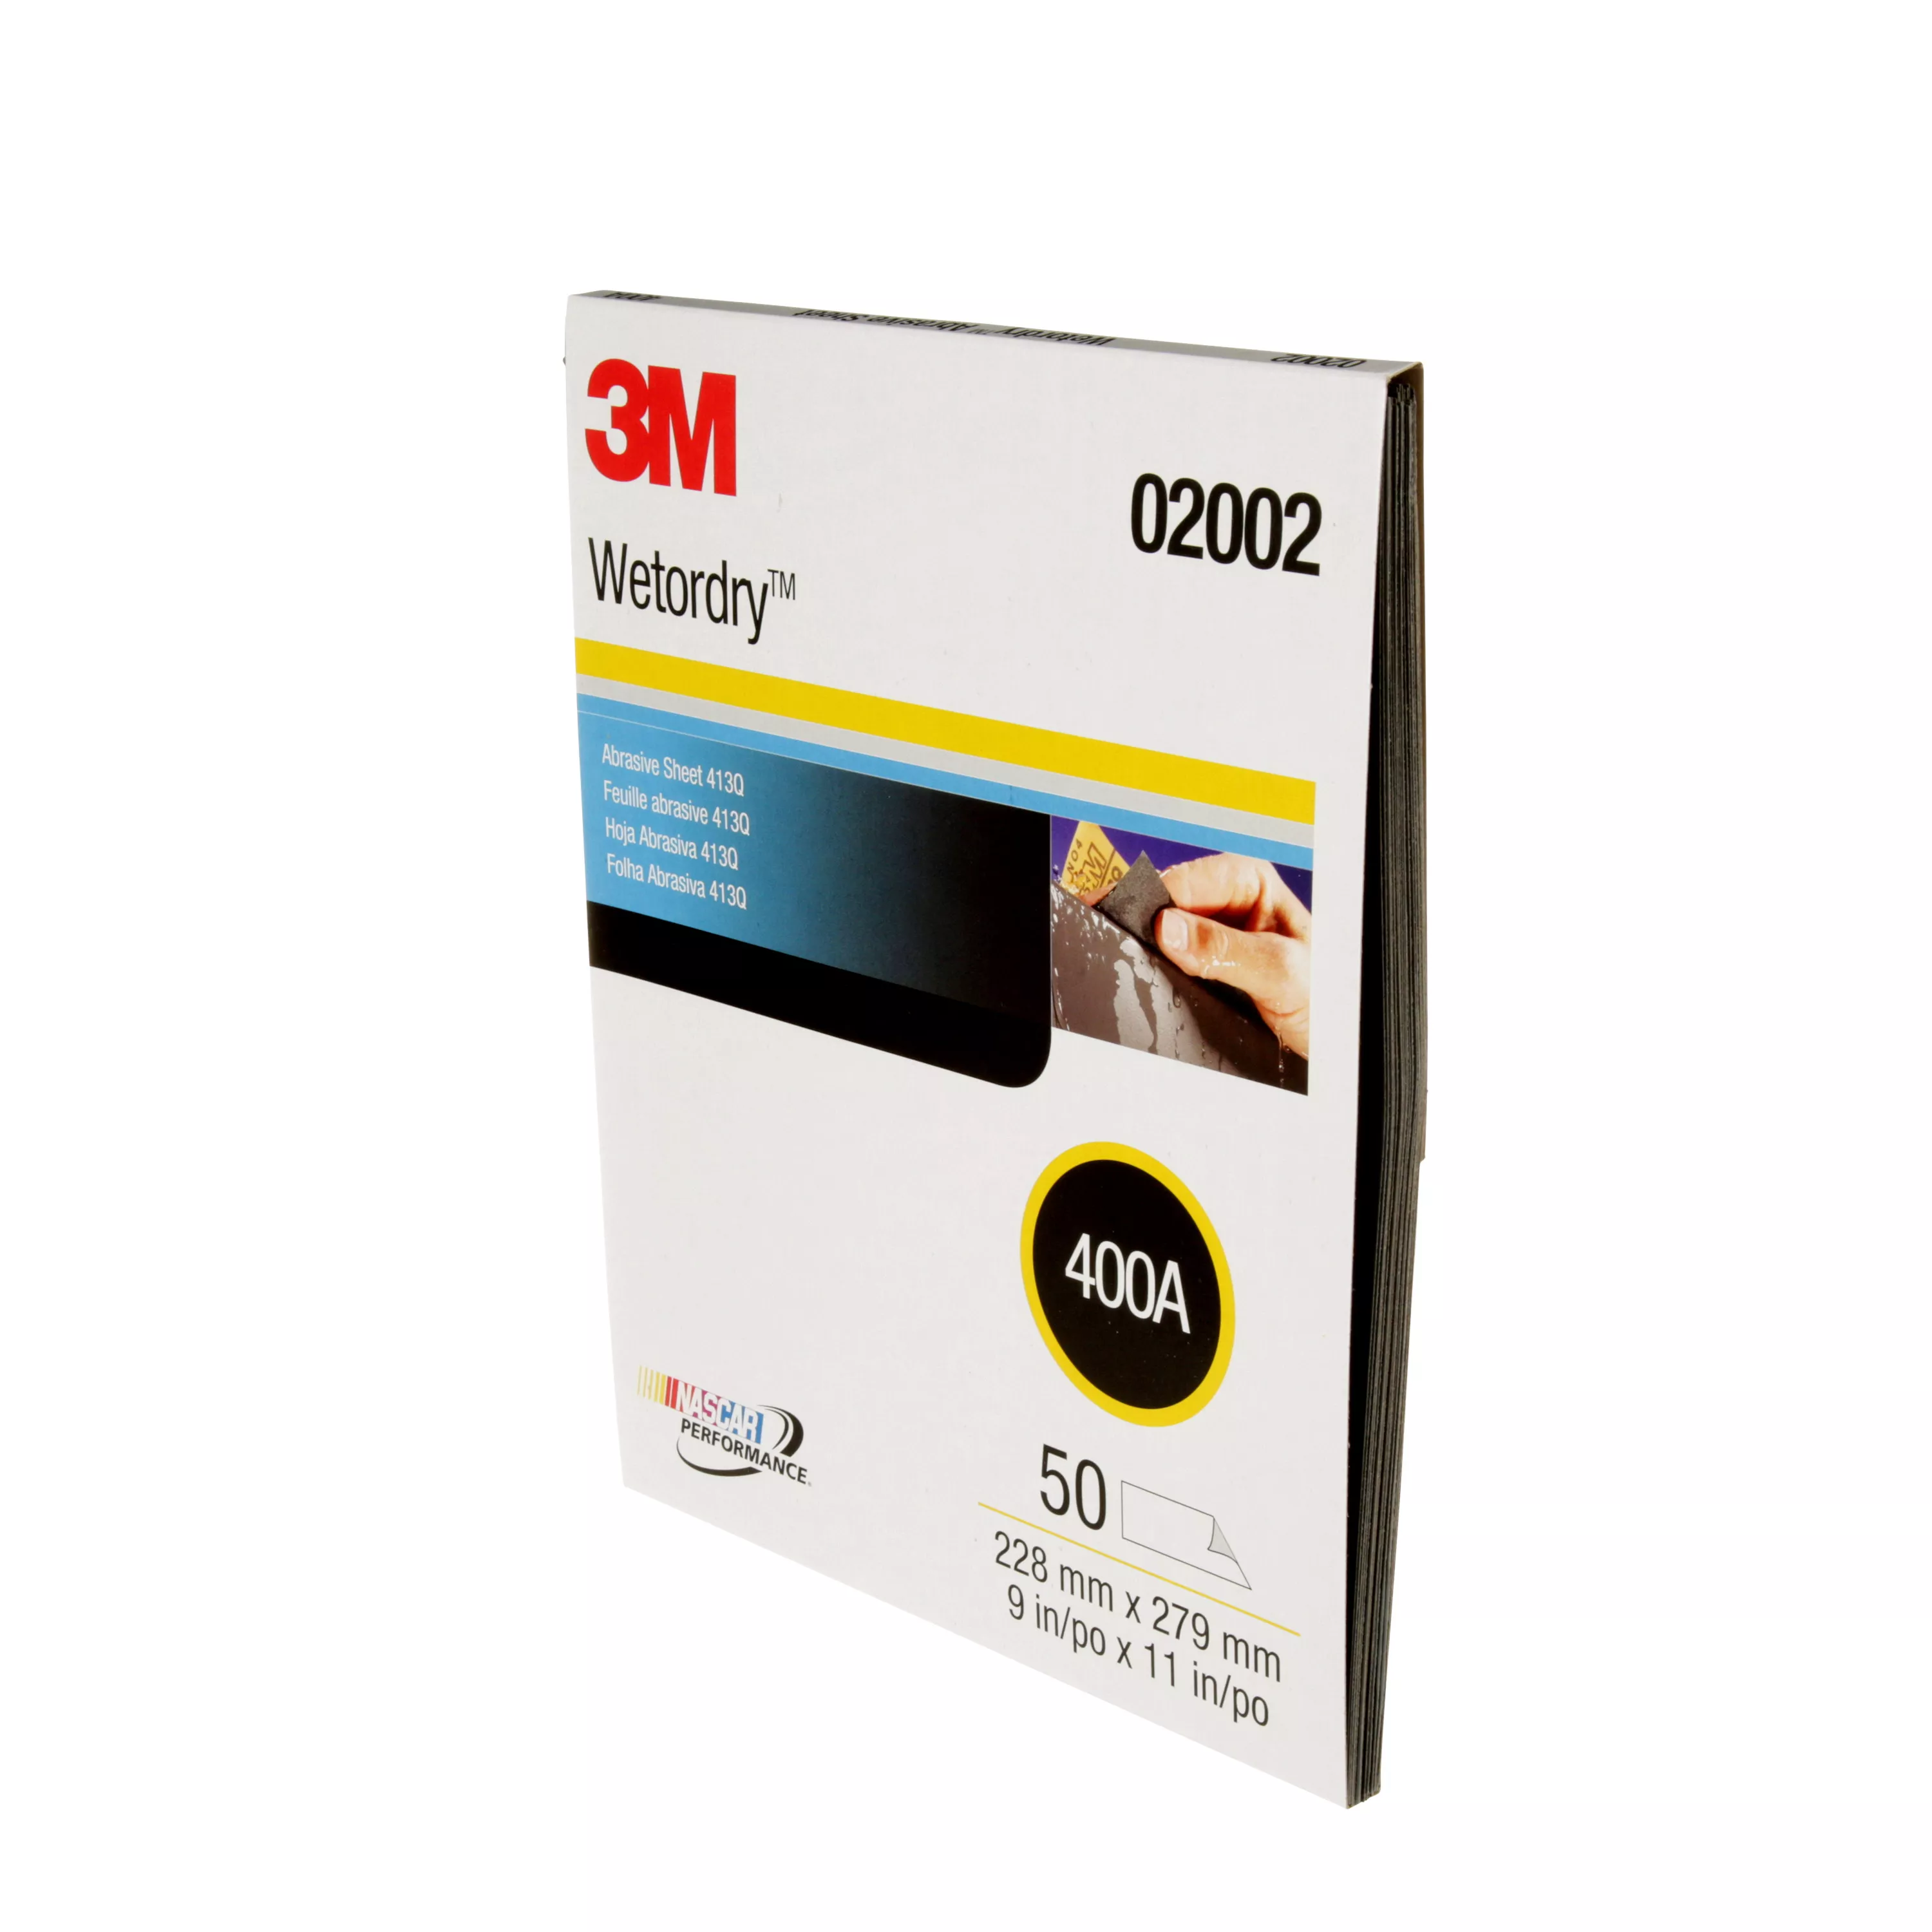 SKU 7000000318 | 3M™ Wetordry™ Abrasive Sheet 413Q